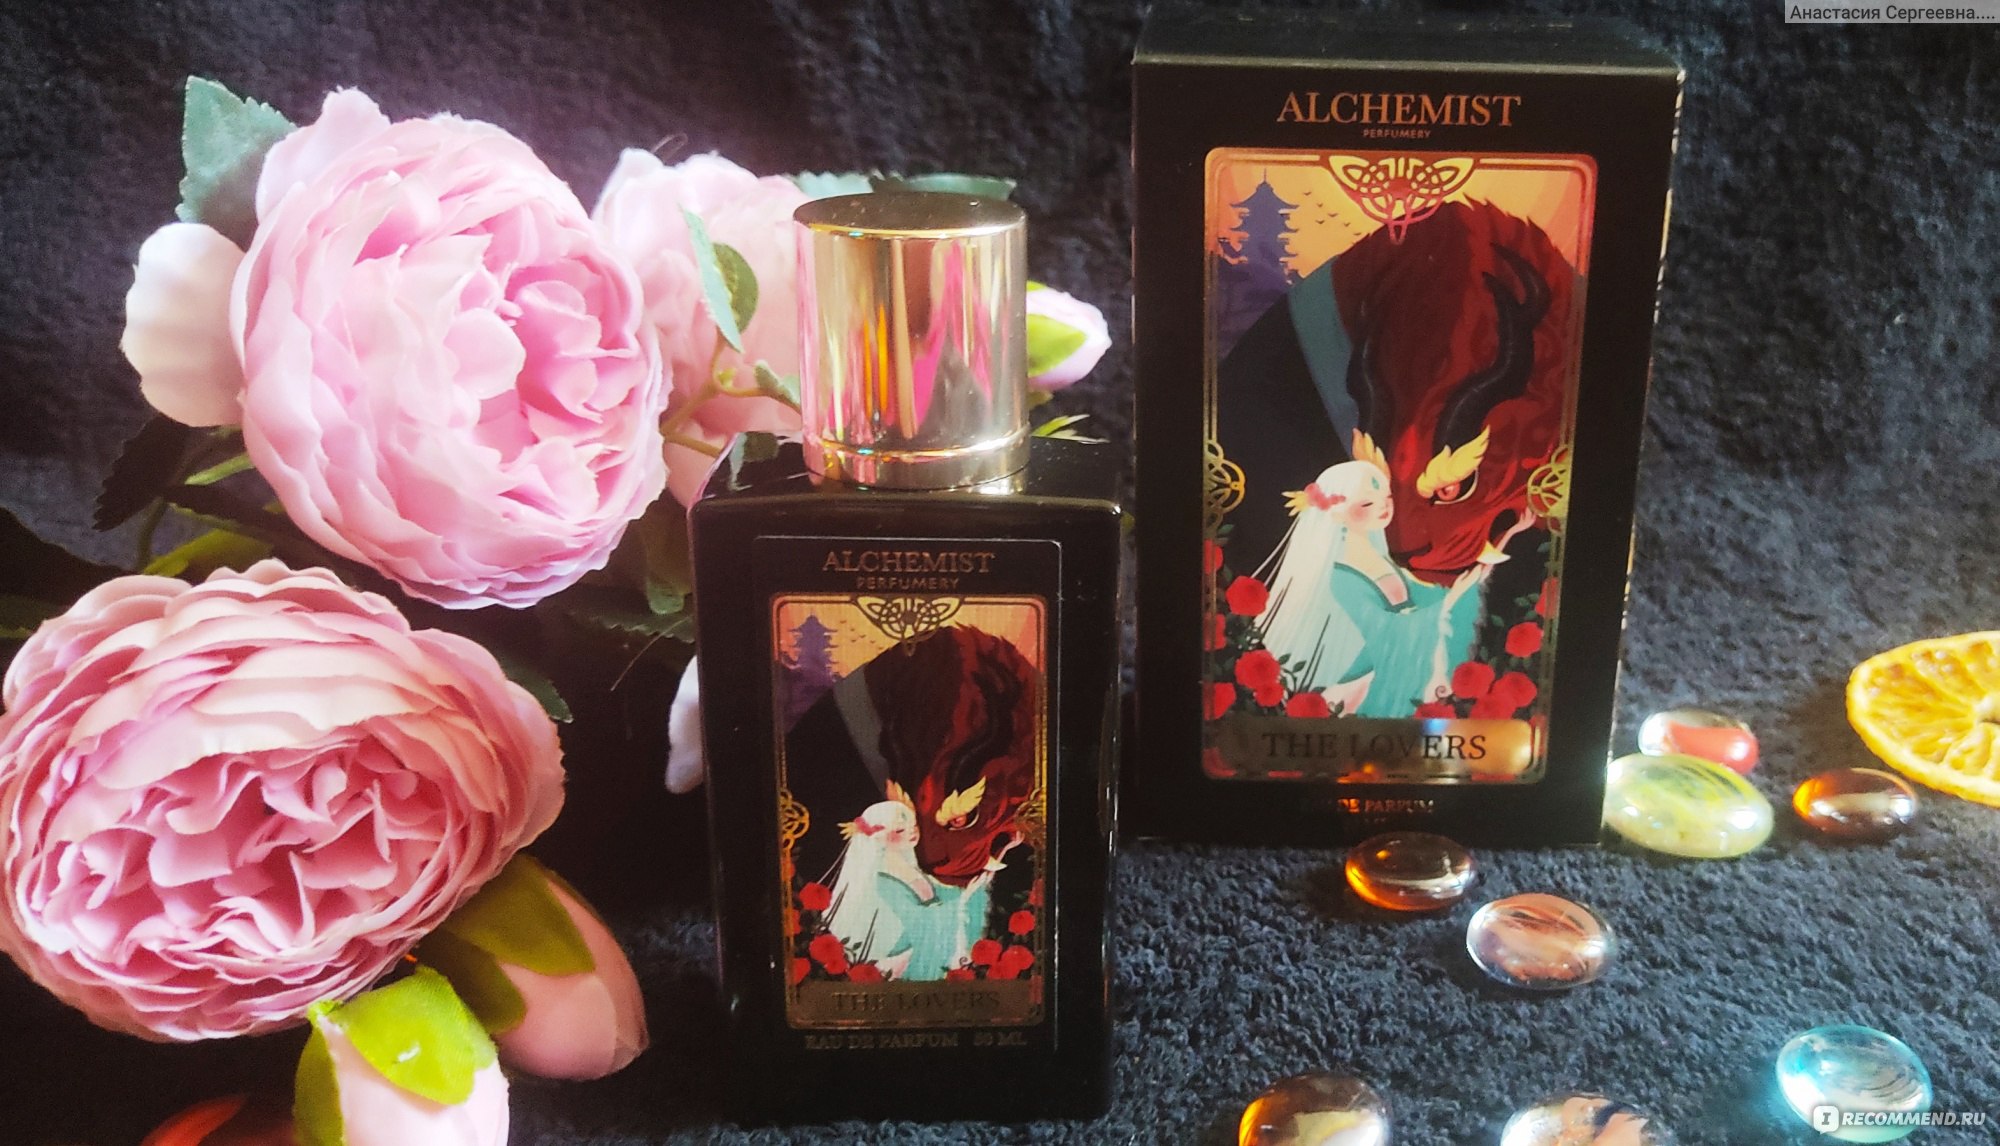 ALCHEMIST Tarot Card "The Lovers" фото